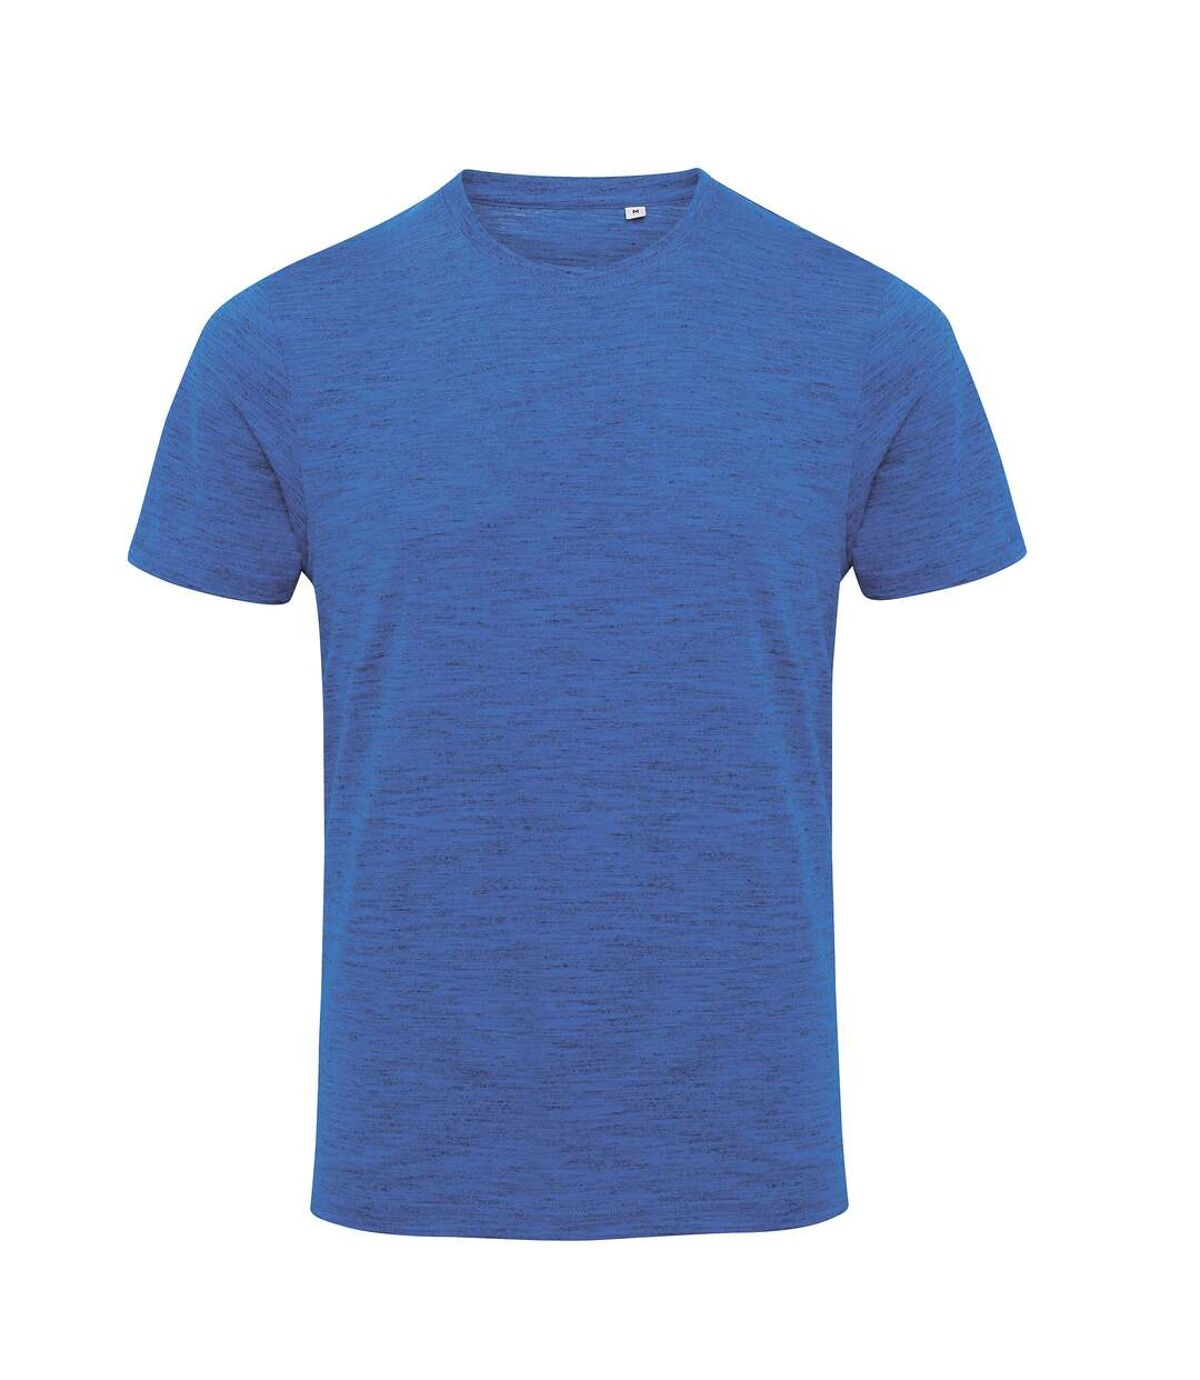 AWDis Mens Cosmic Blend T-Shirt (Cosmic Blue/Cosmic Black) - UTPC2977